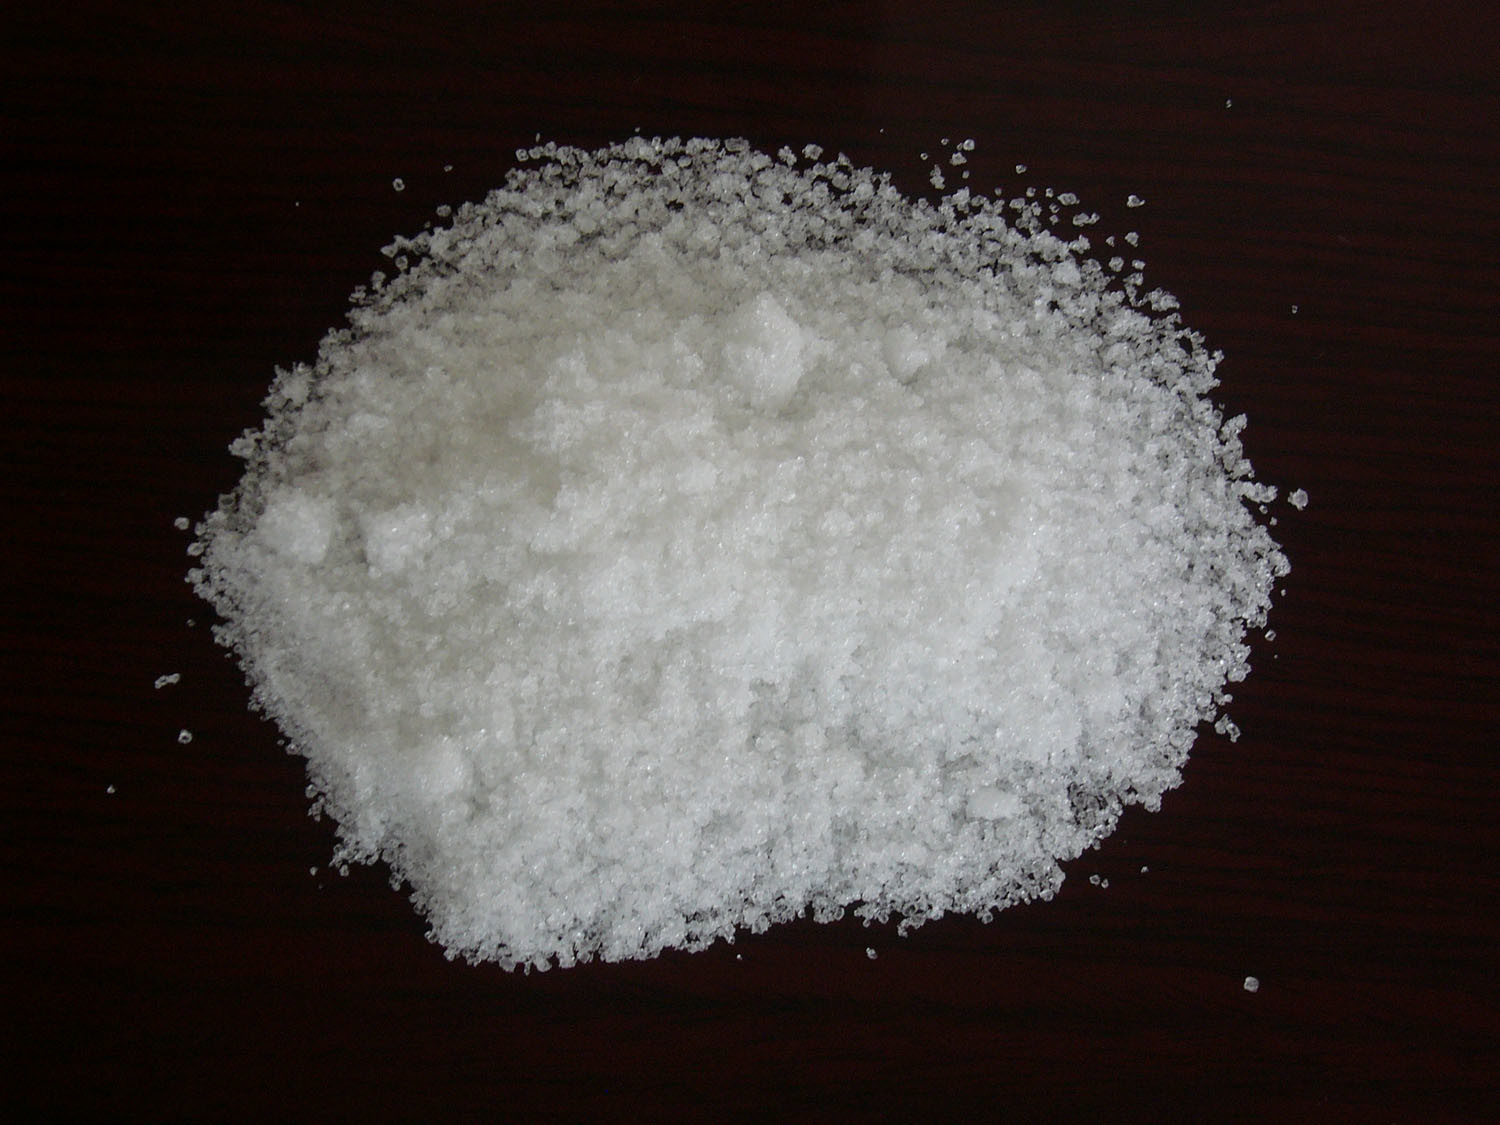 Calcium Nitrate Crystal (11.7-0-0 Ca: 16.6%)